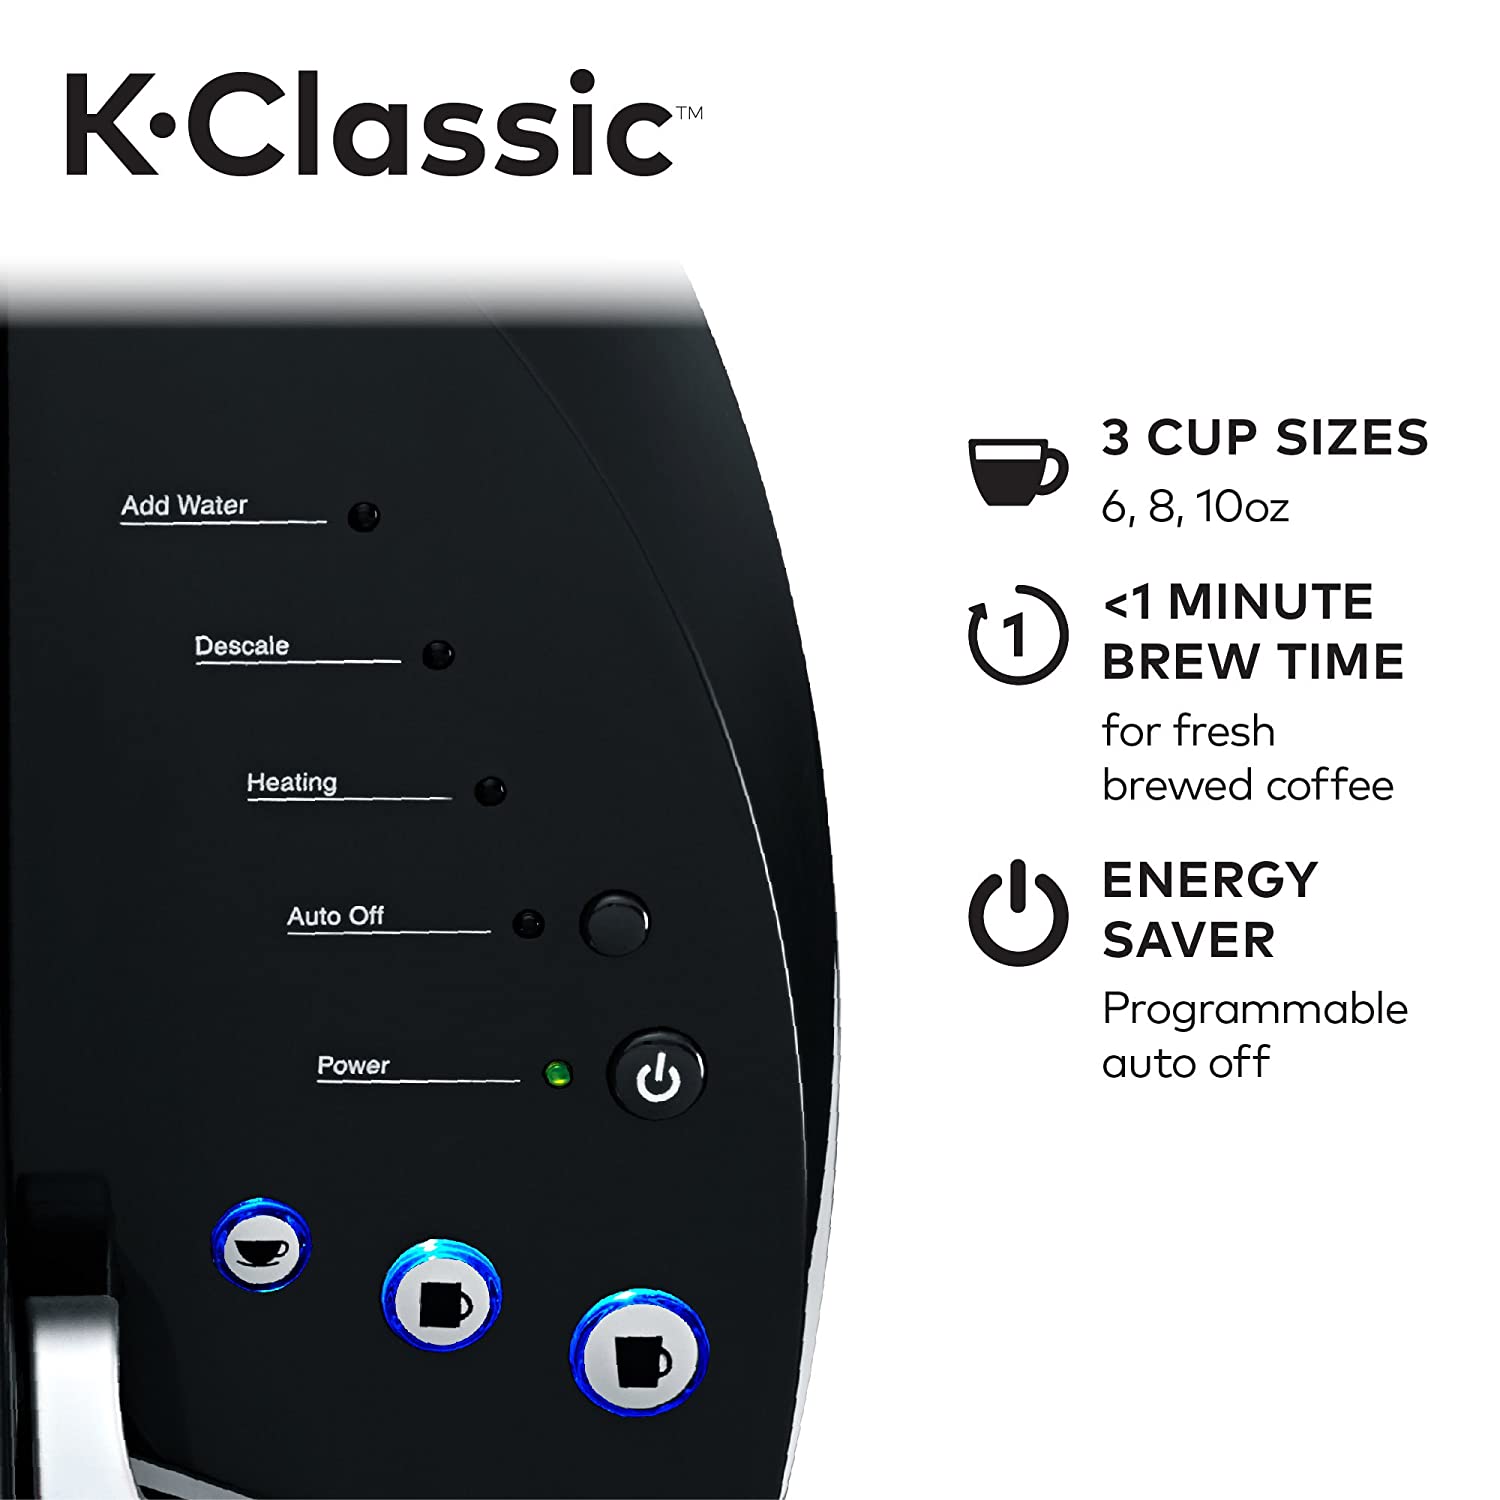 Solve Keurig Blinking Light: Reasons & Fixes for Coffee Maker Issues